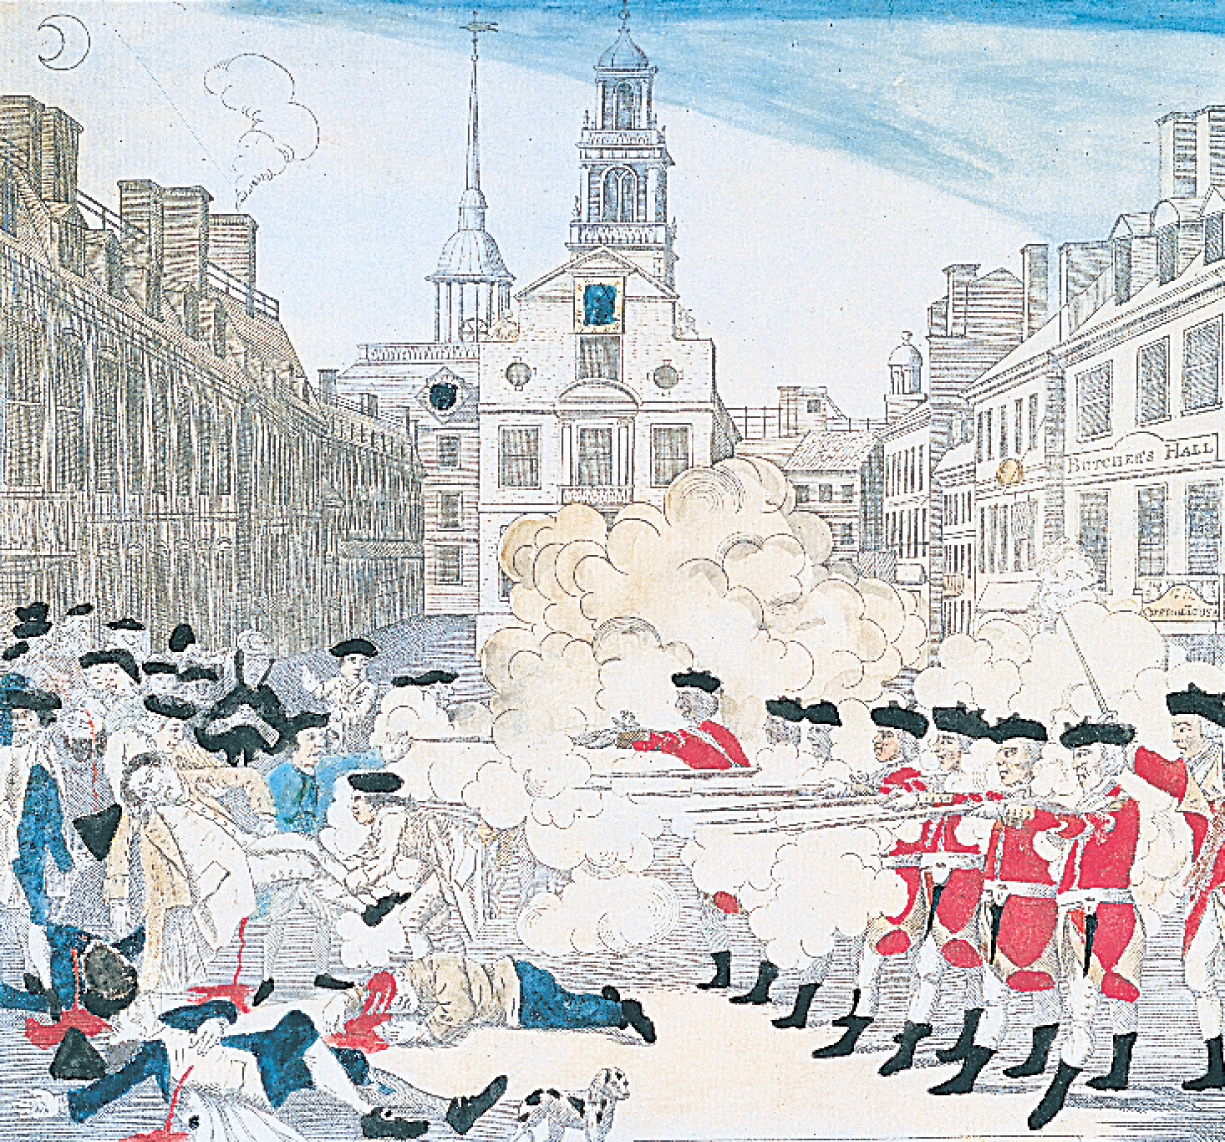 Illustration: British soldiers shoot at civilians in Boston.